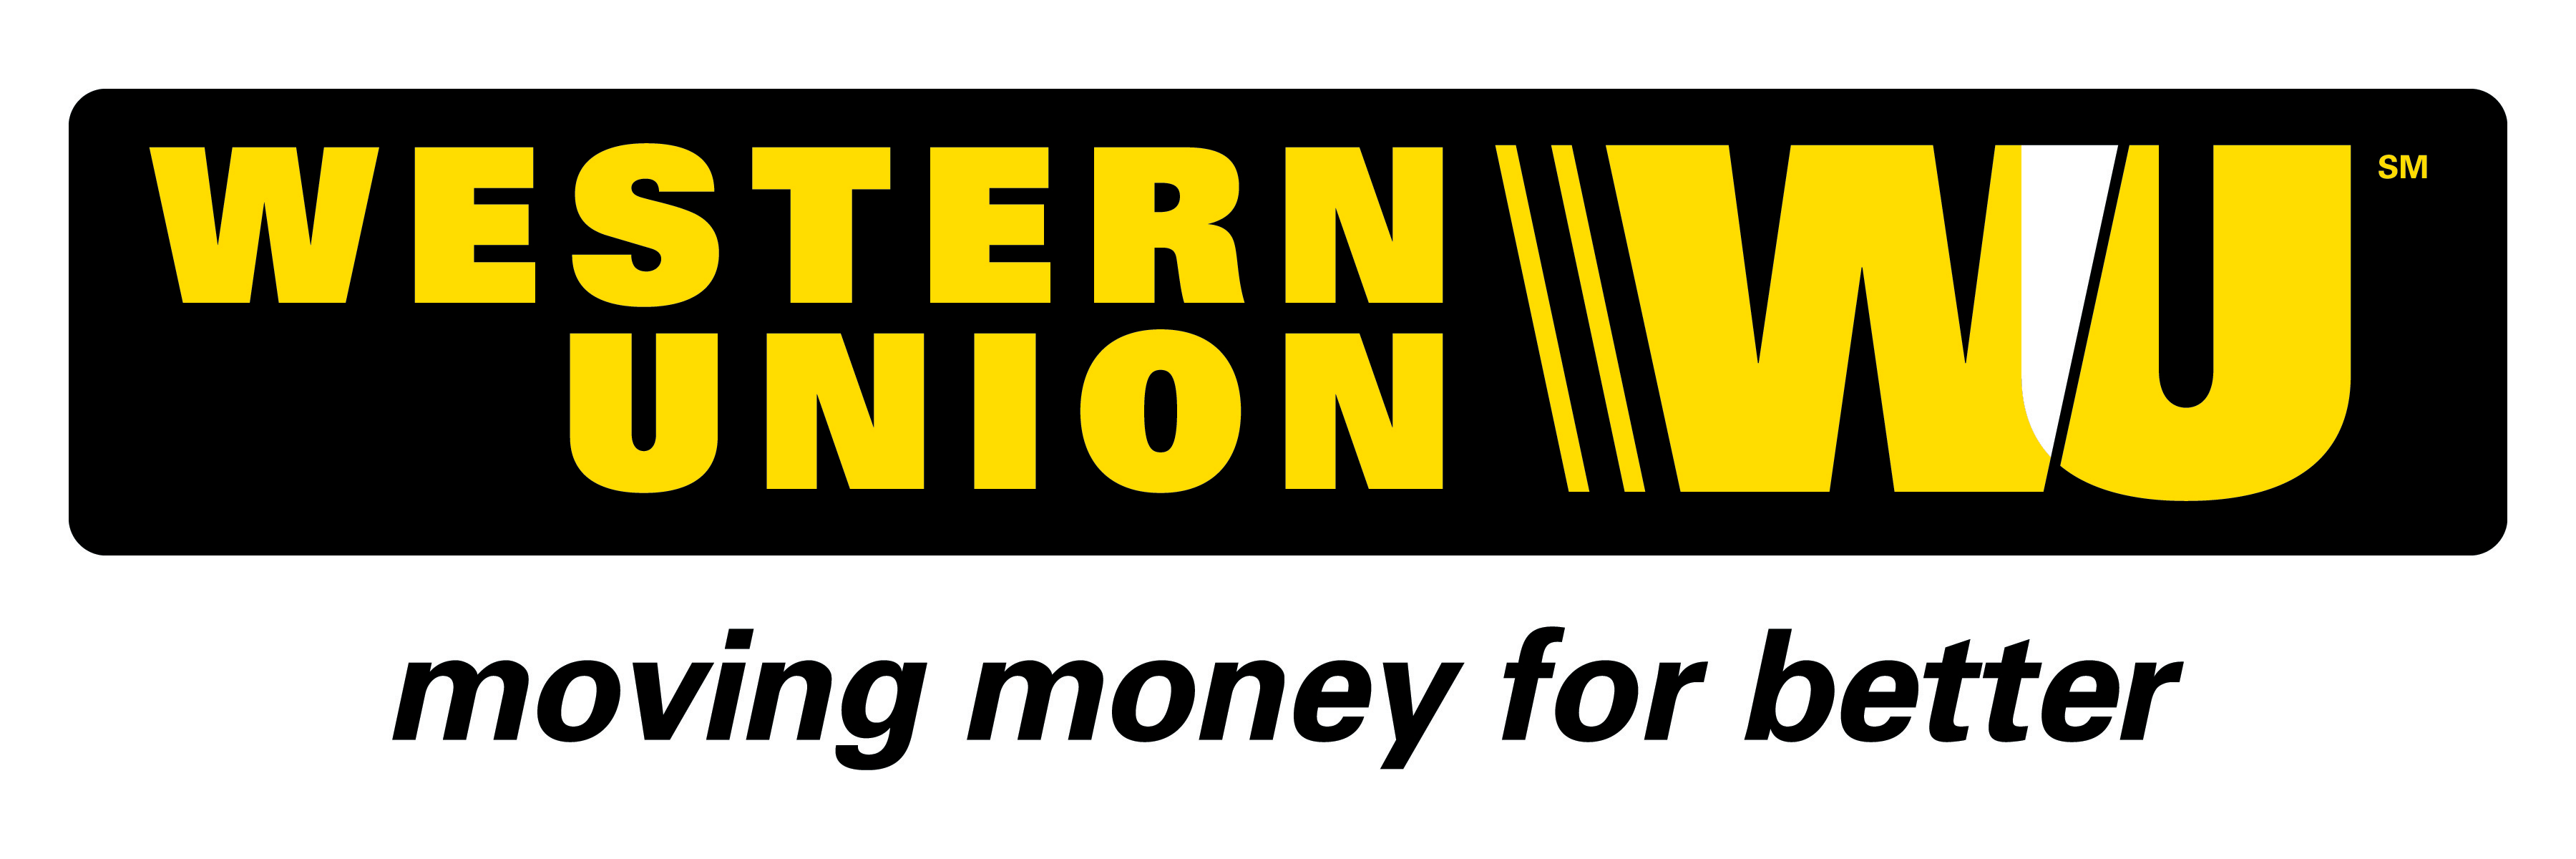 Western Union (alliance) - Wikipedia